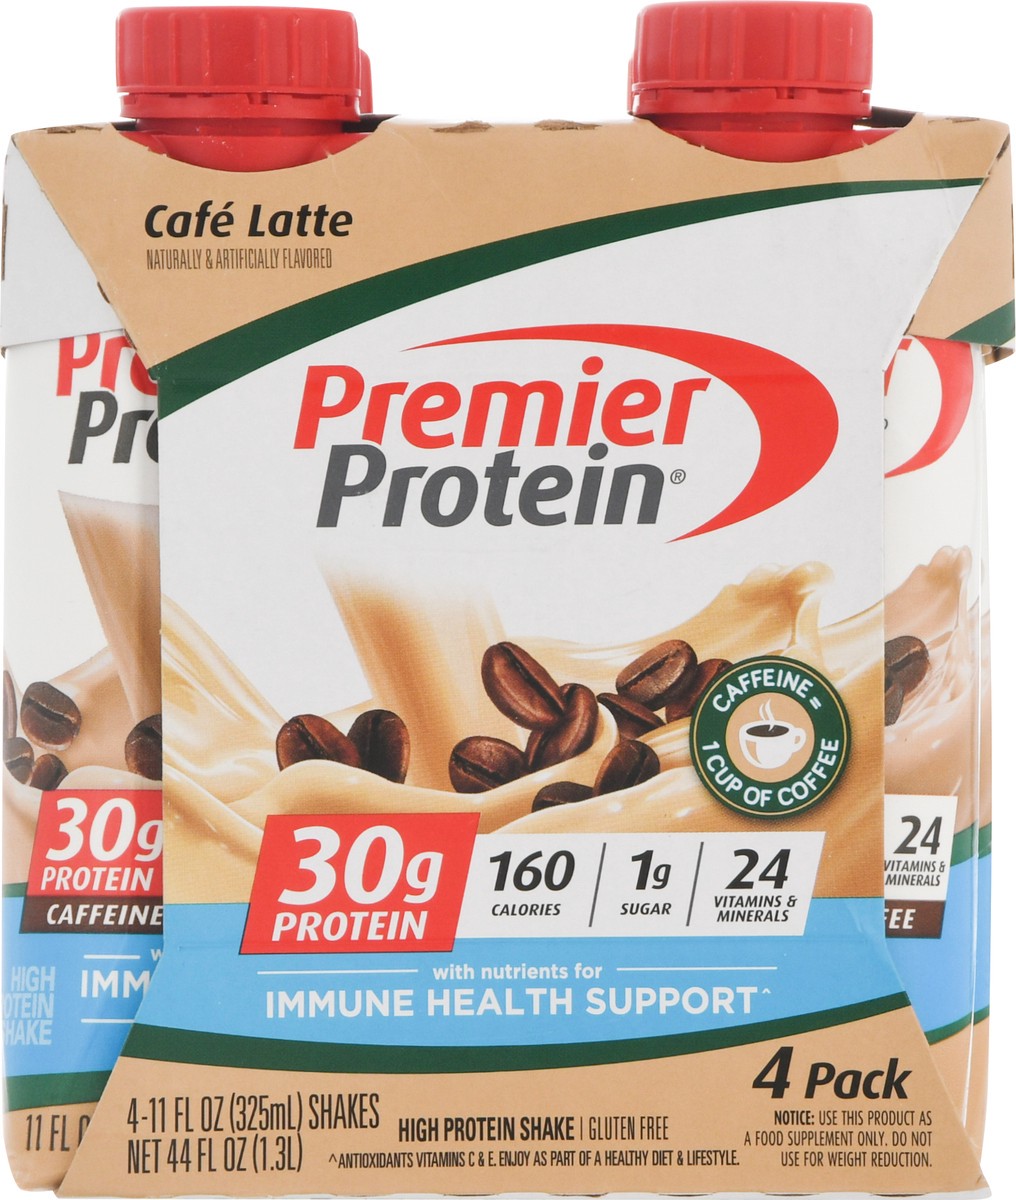 slide 6 of 9, Premier Protein Cafe Latte High Protein Shake 4 - 11 fl oz Shakes, 4 ct